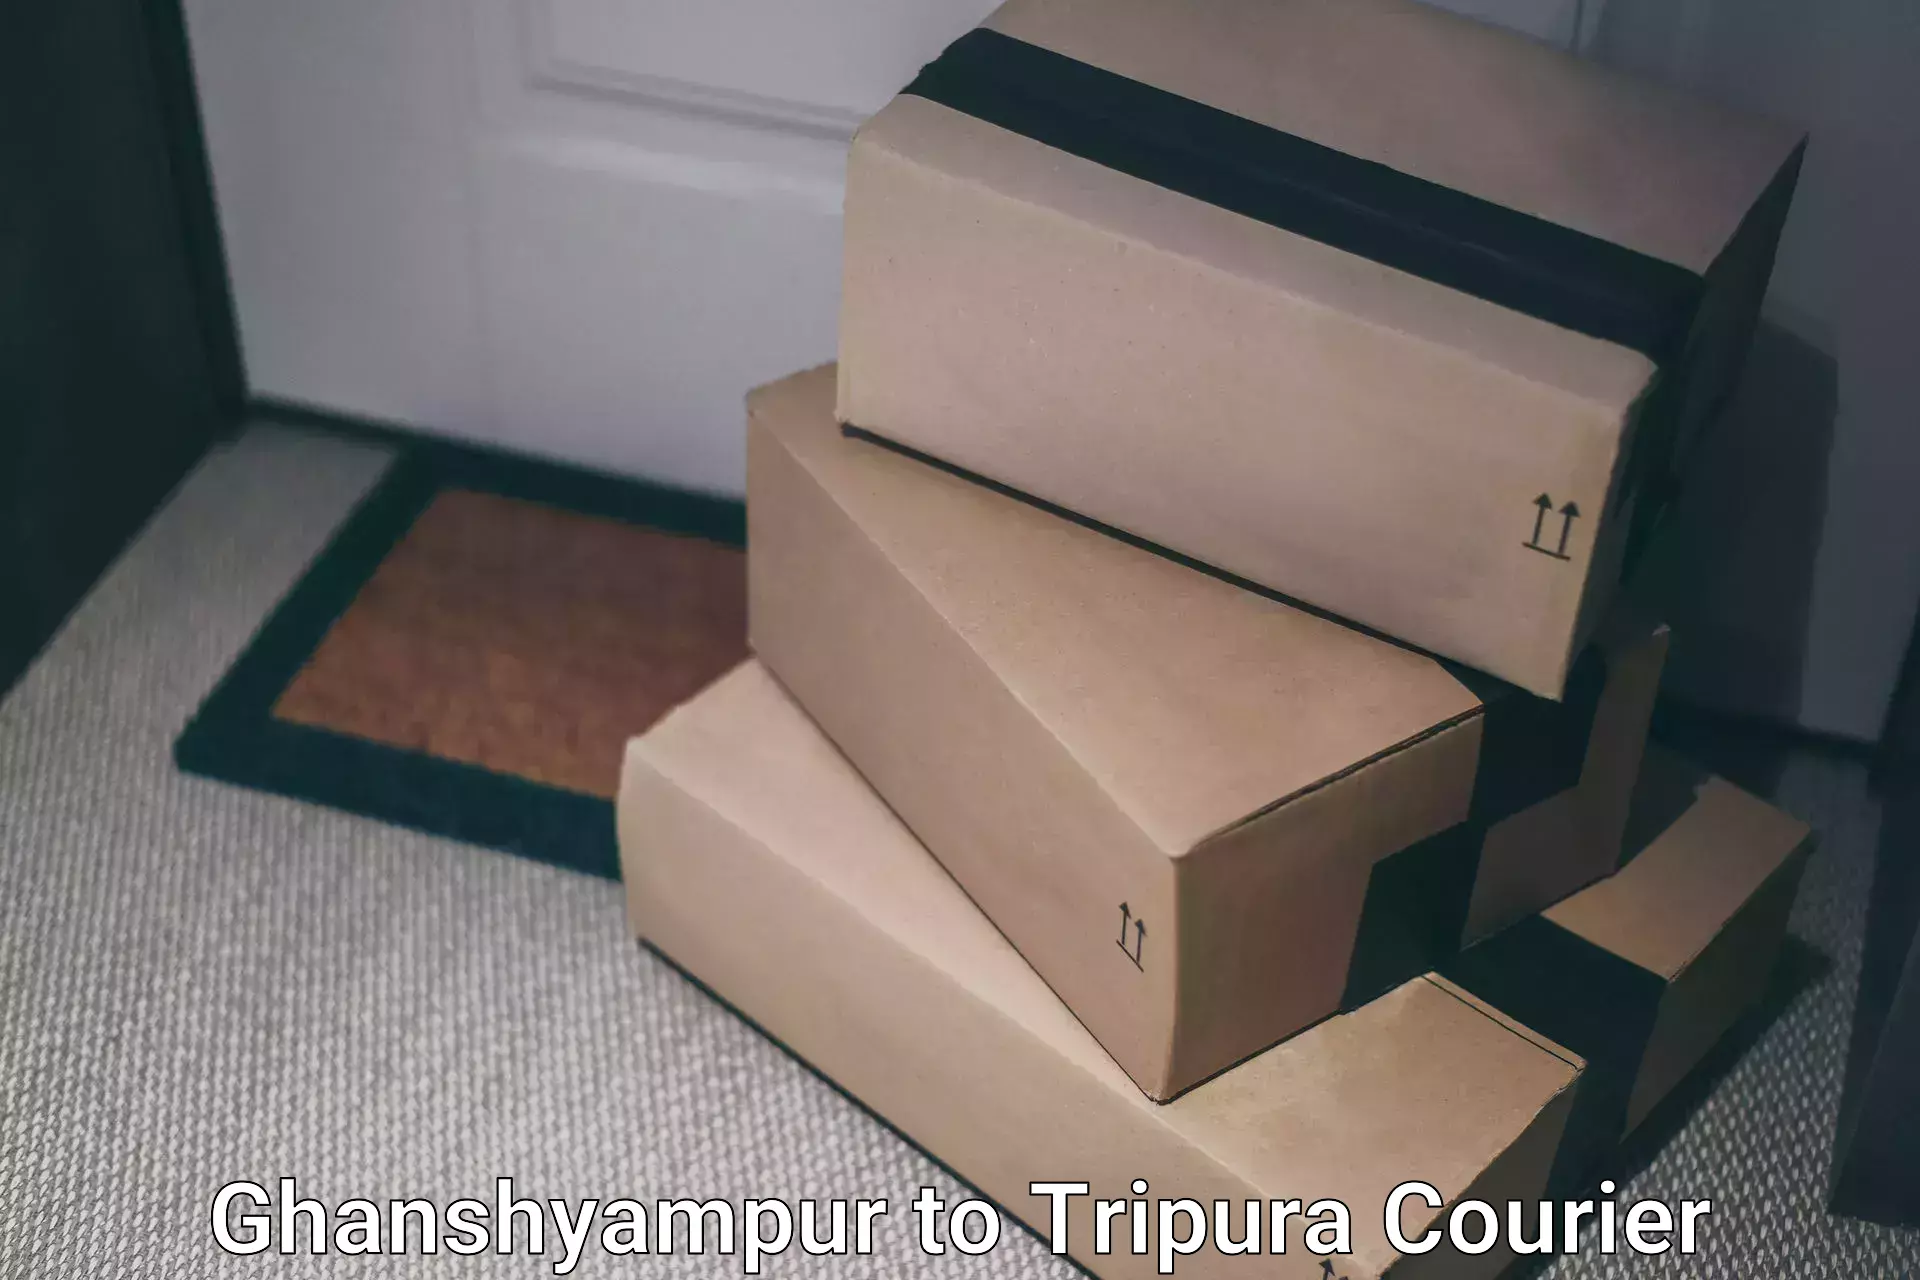 International courier networks Ghanshyampur to Udaipur Tripura